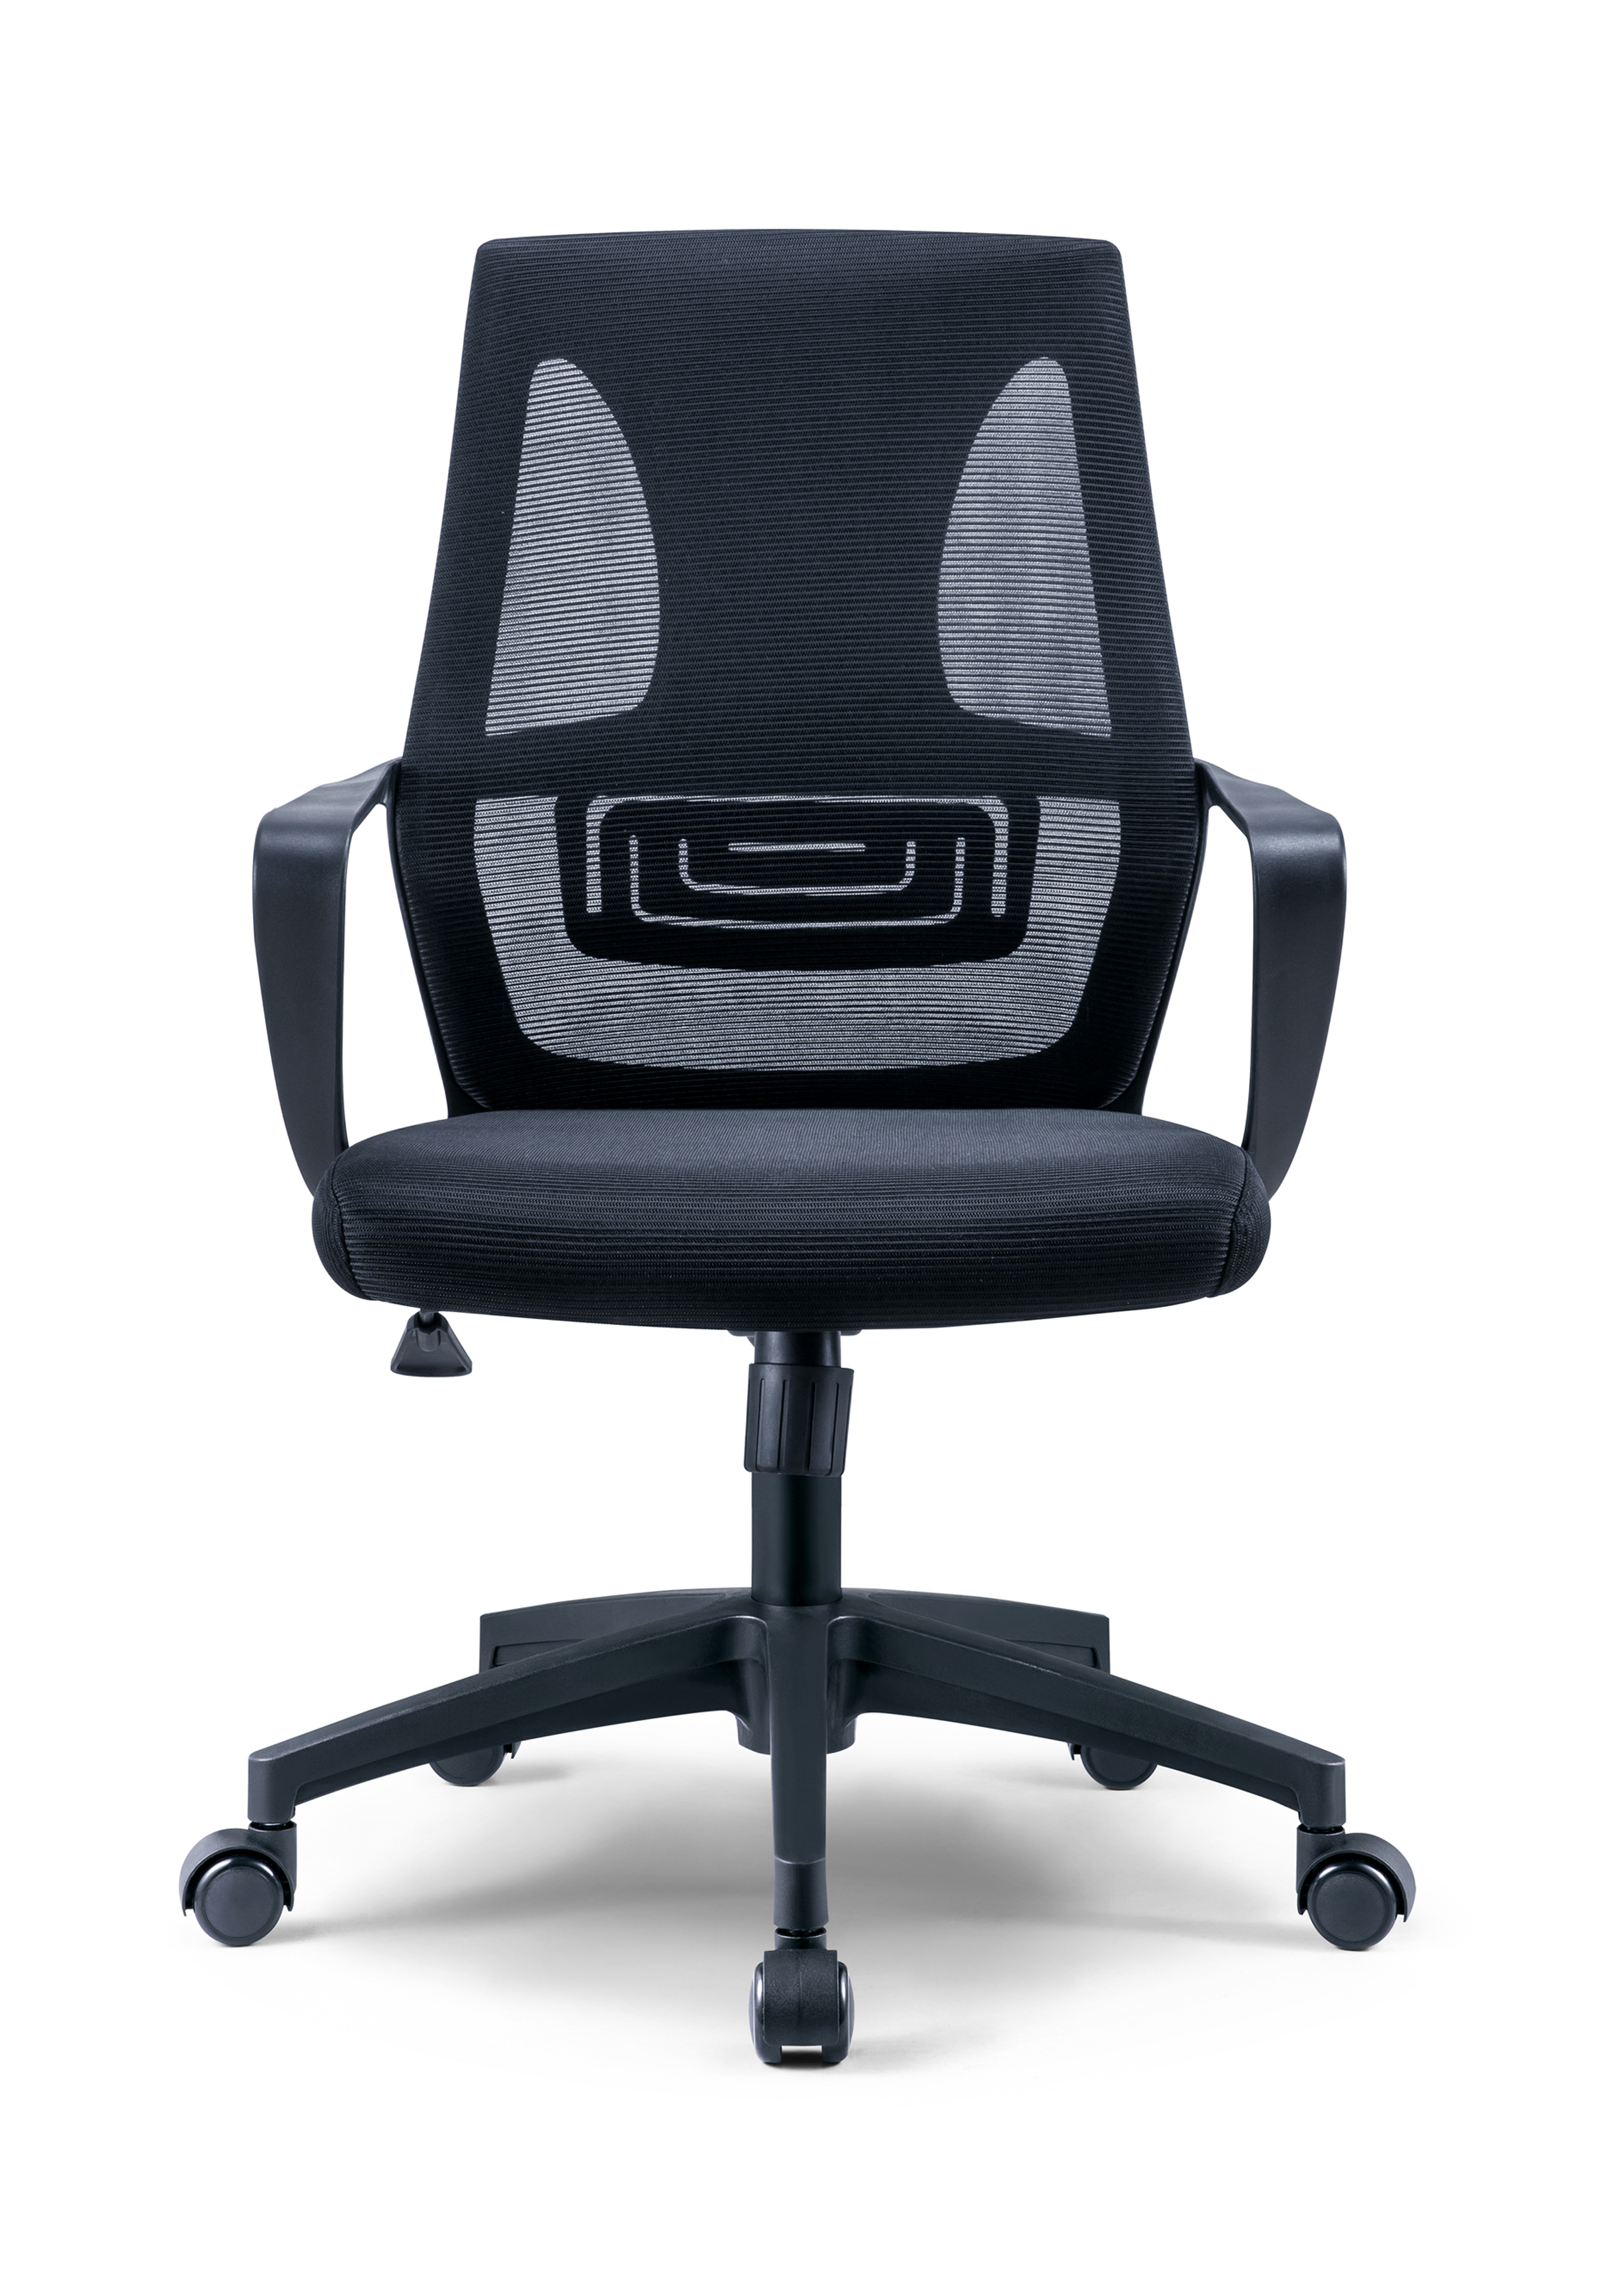 Newcity 544B 工厂直销网椅旋转中背行政网办公椅会议室网椅电脑网椅供应商佛山中国